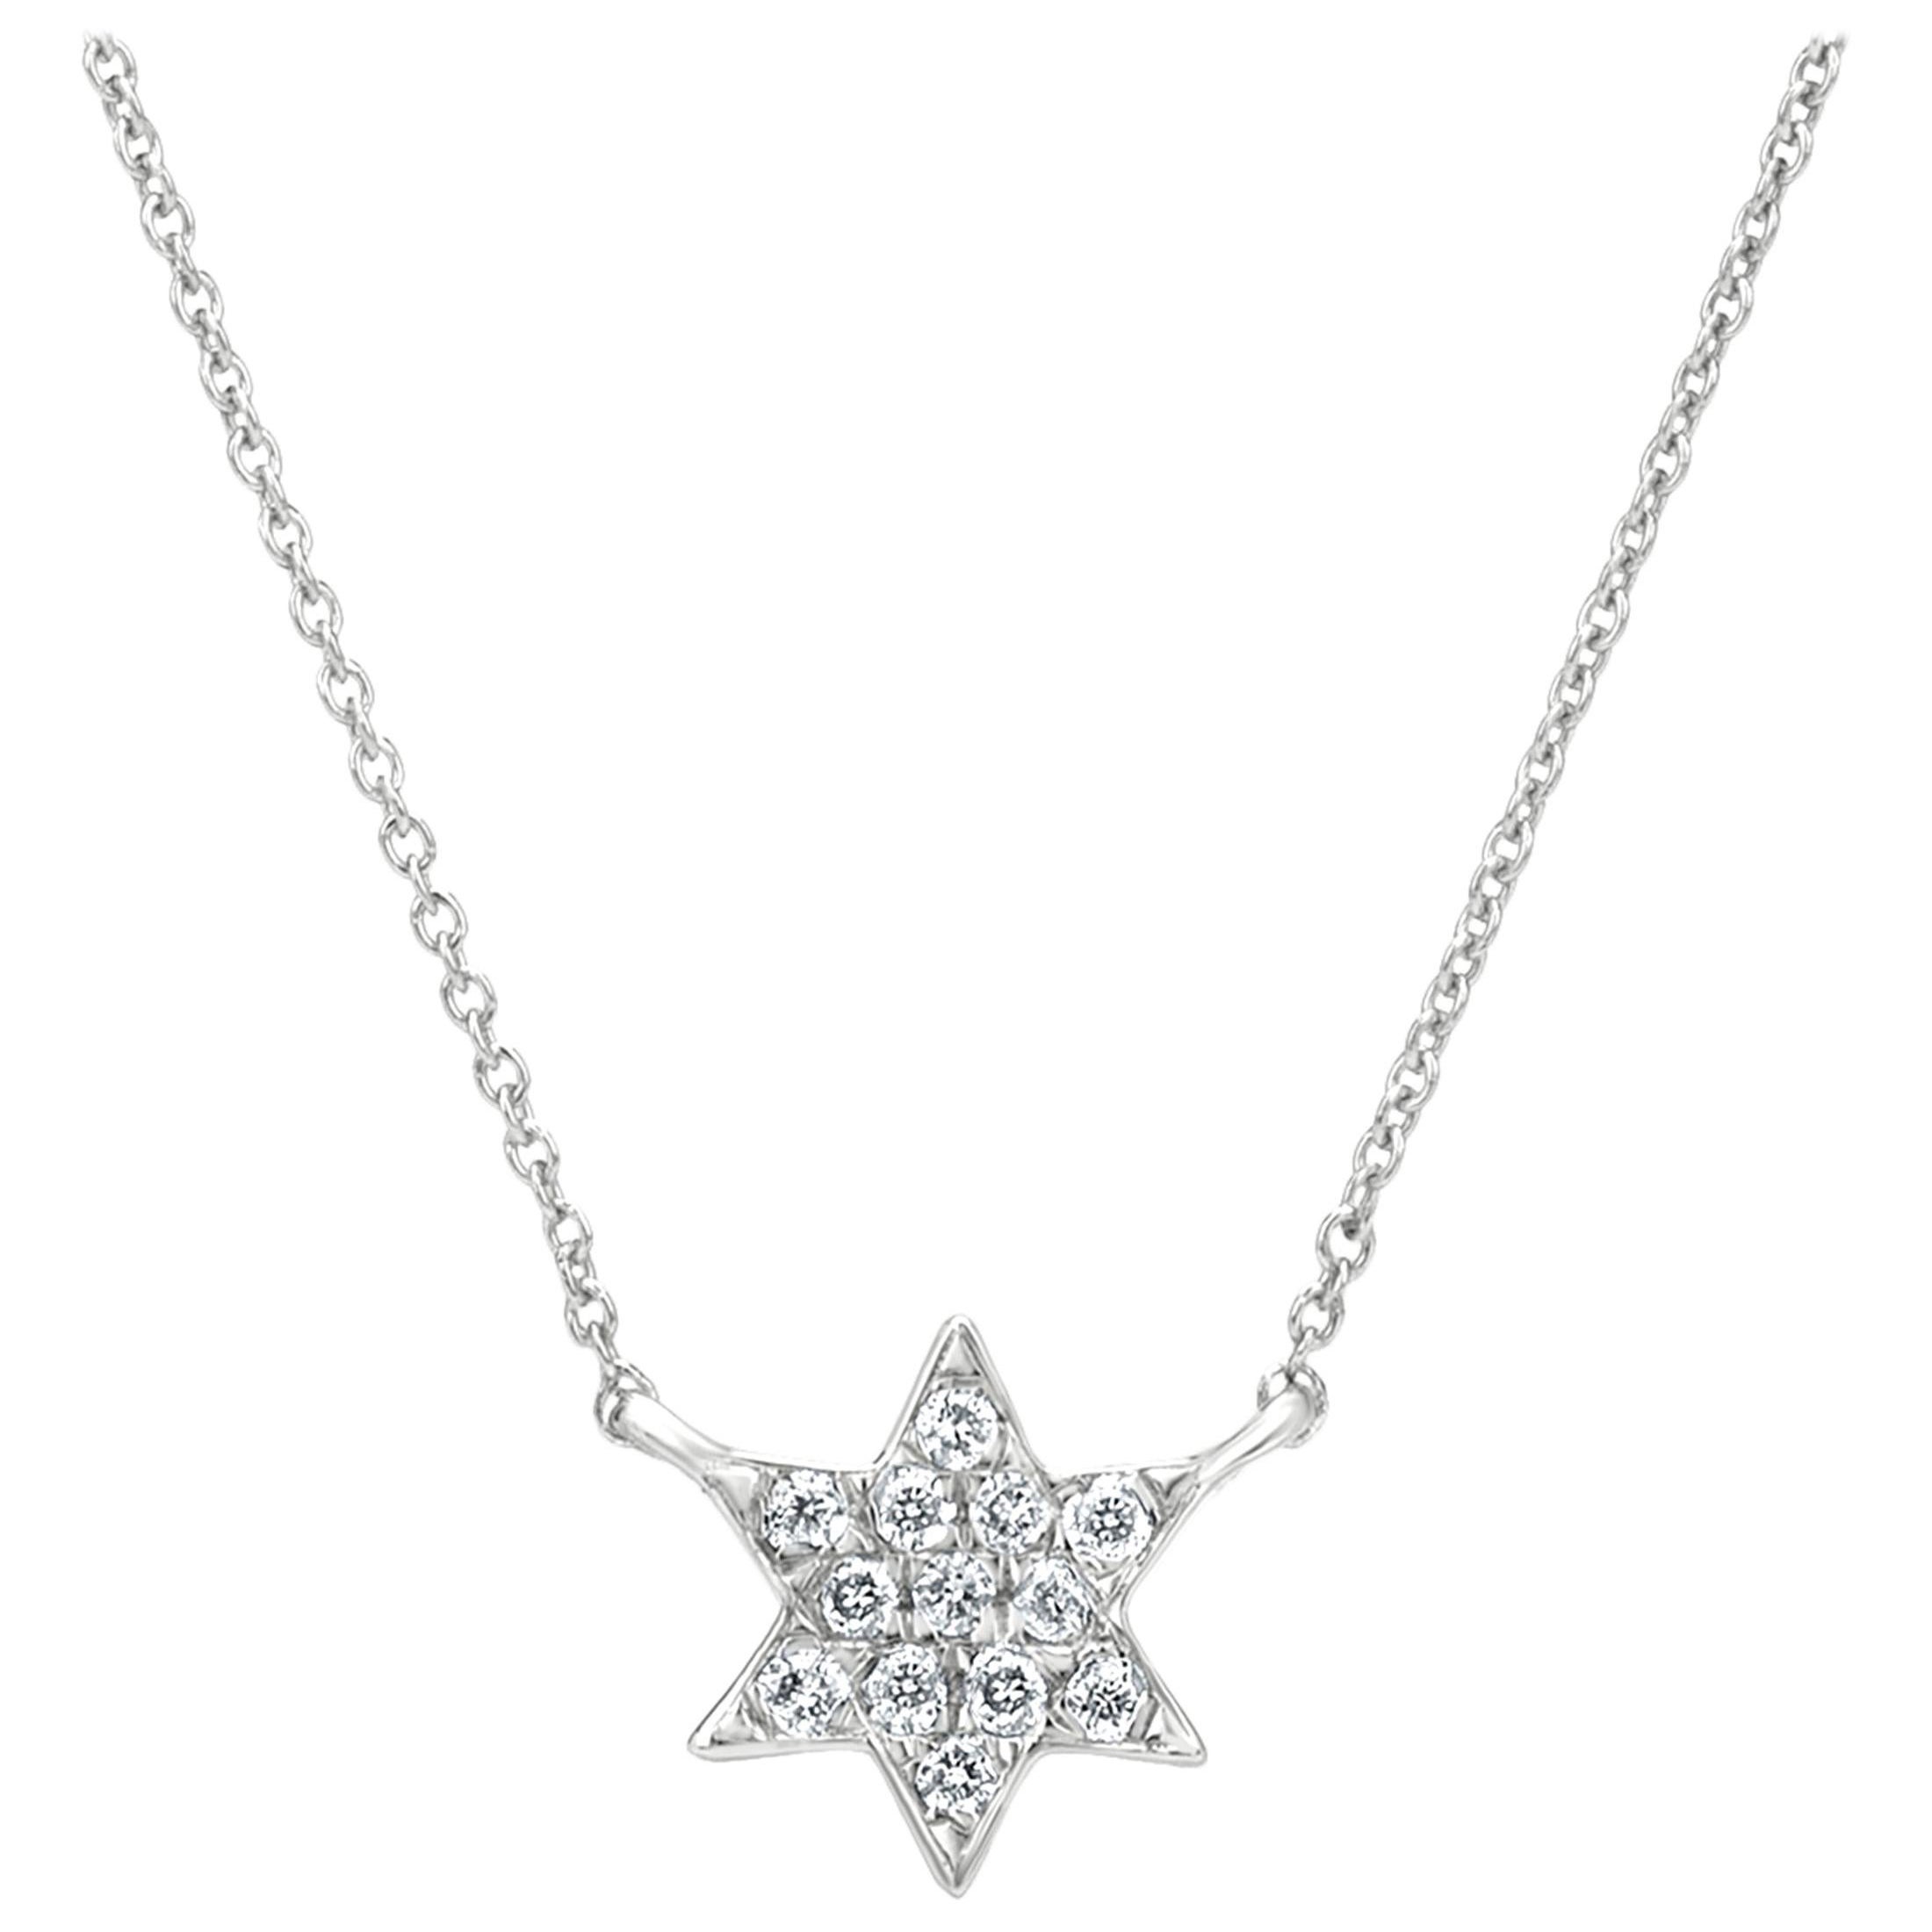 Luxle Diamond Star Pendant Necklace in 18K White Gold